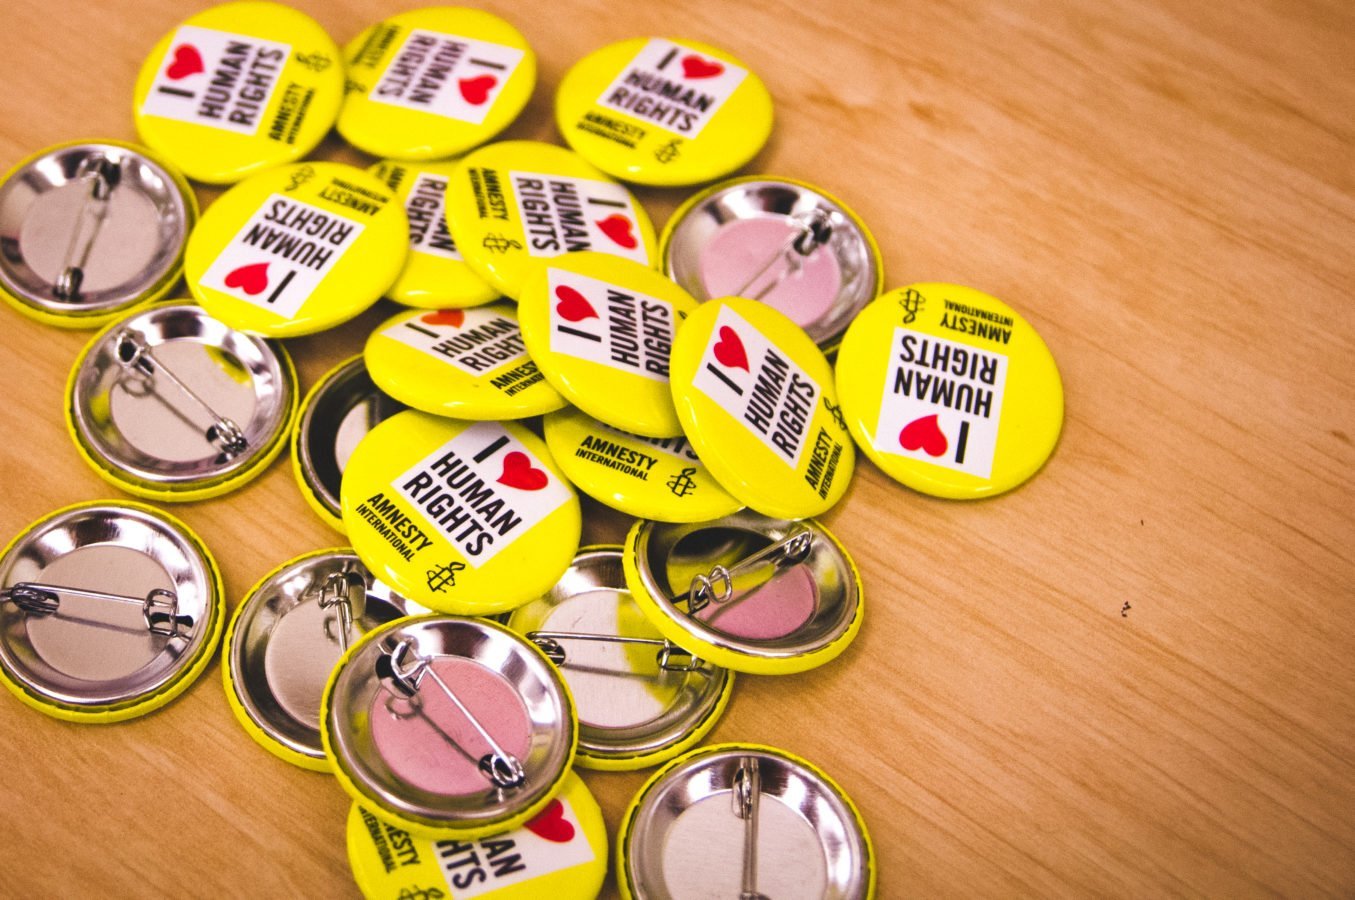 Amnesty International badges